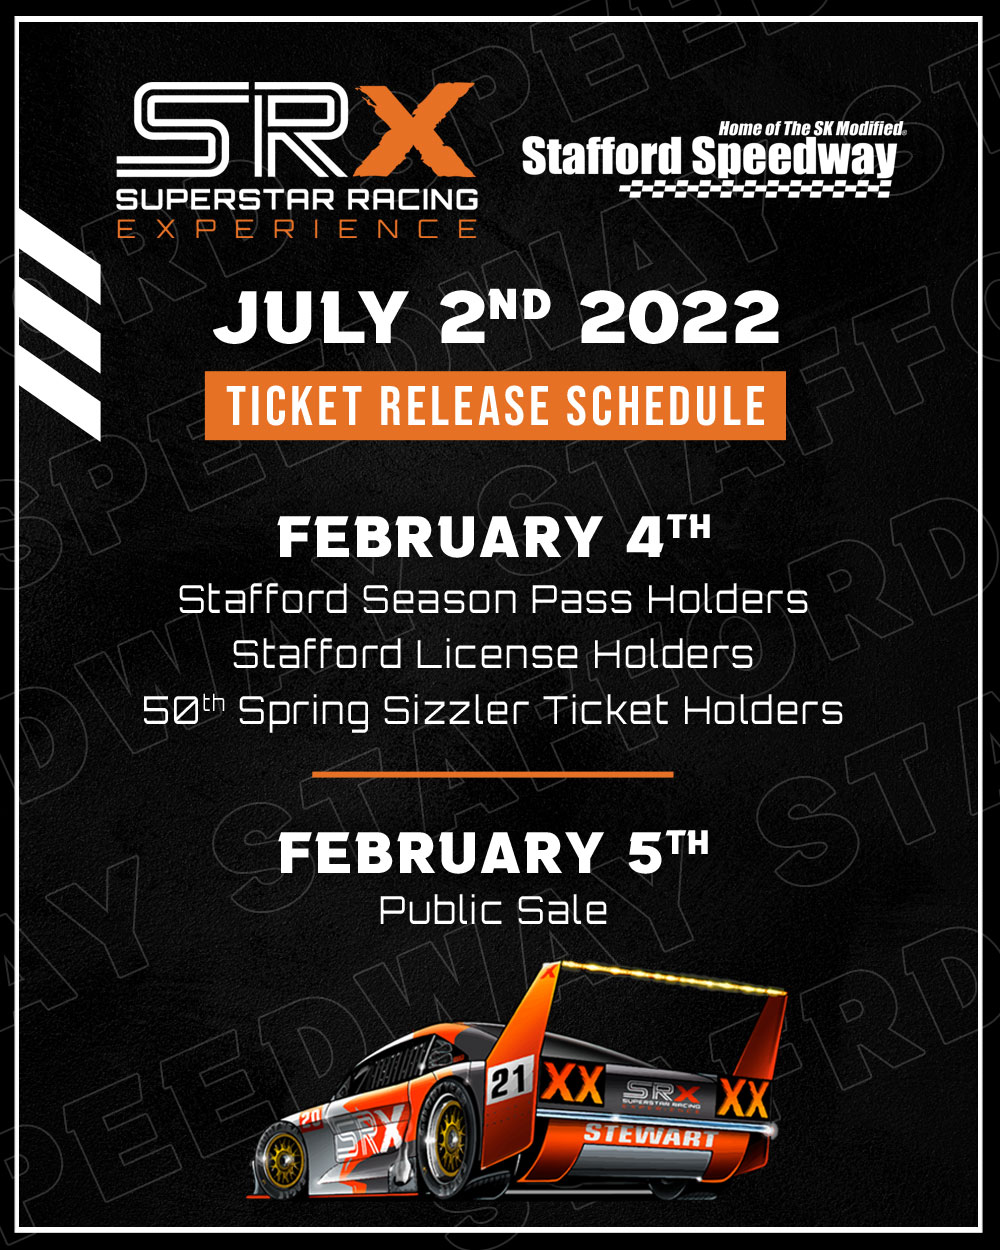 SRX Racing Returns to Stafford Speedway Saturday, July 2nd